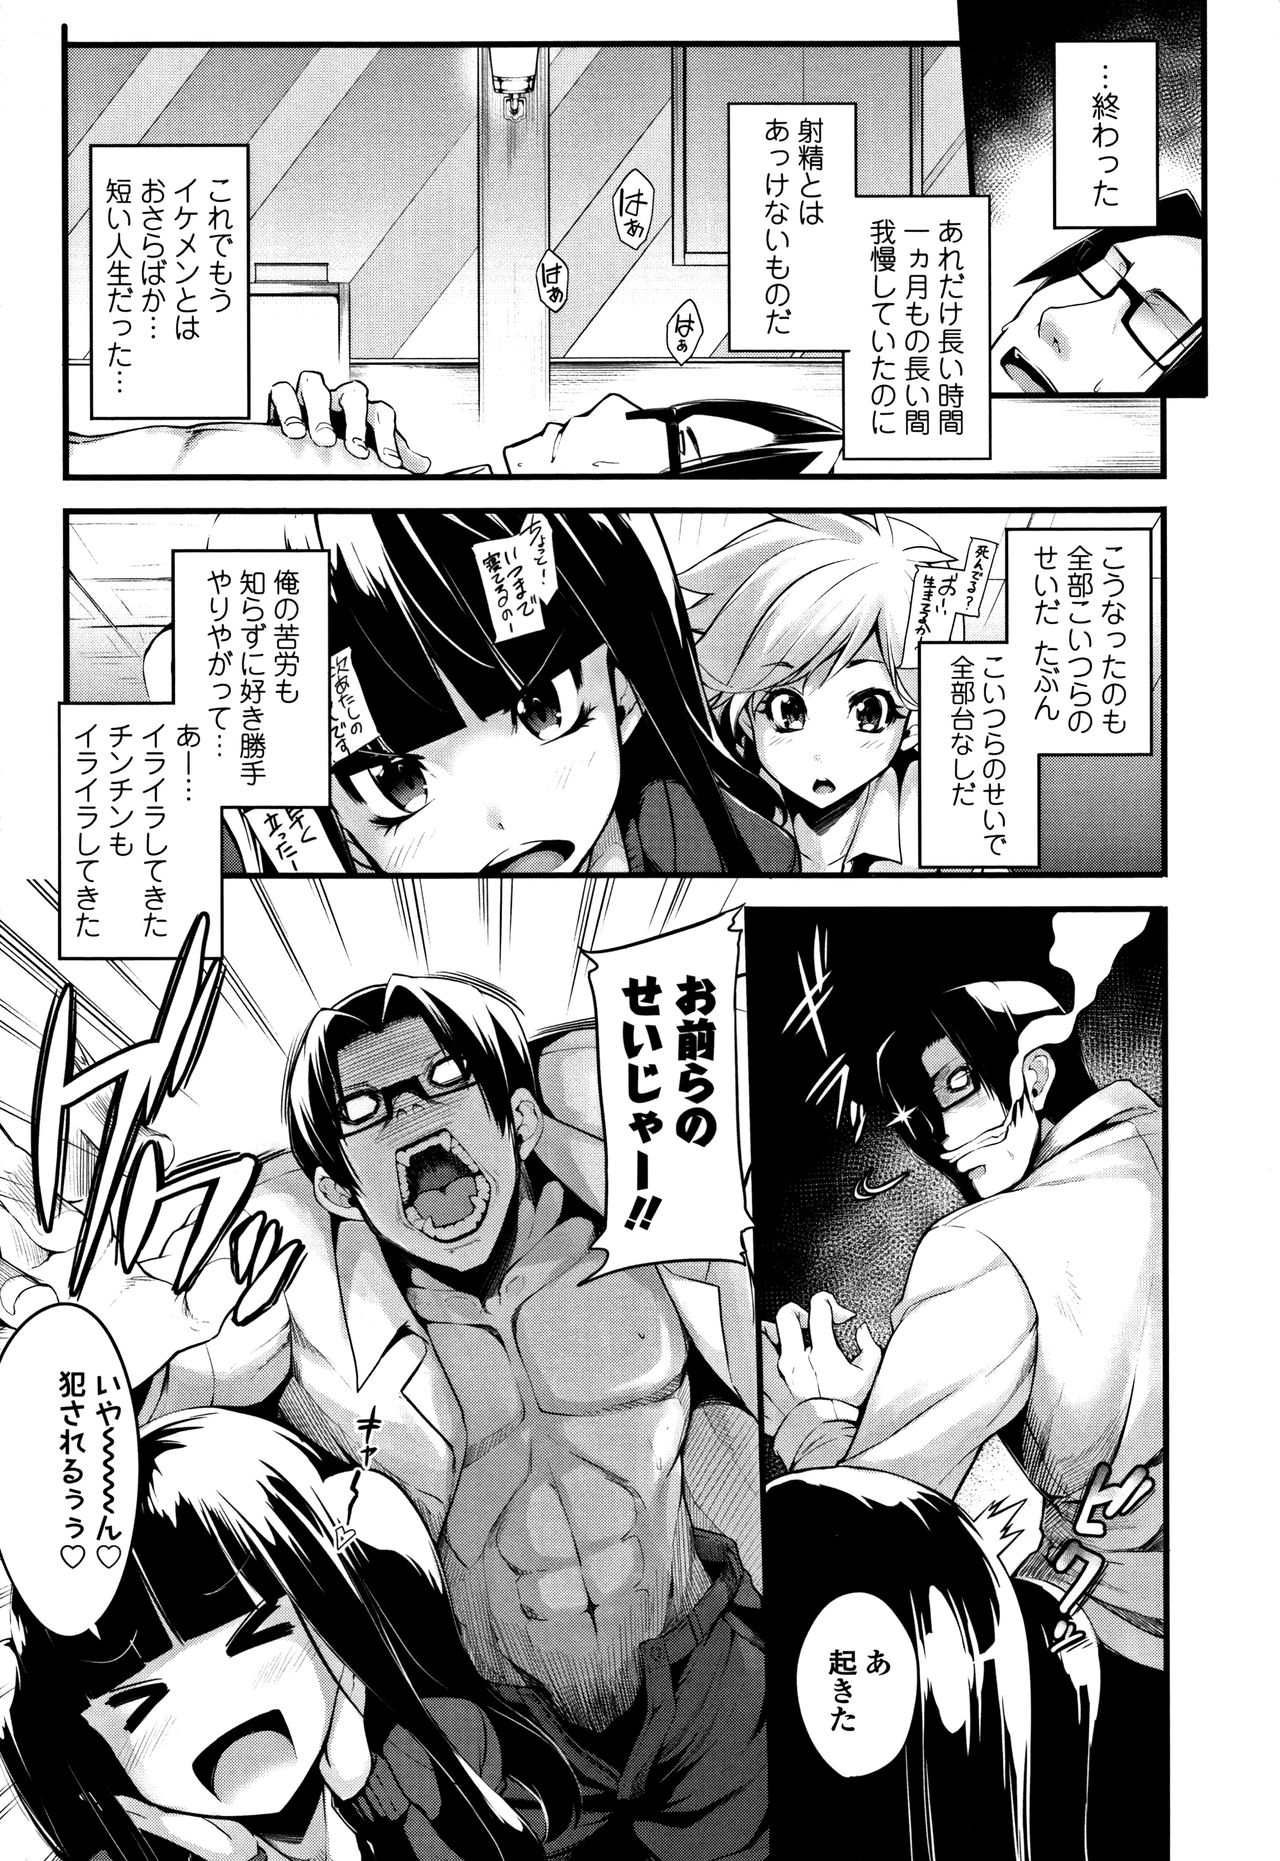 [SAKULA] Koakuma Kanojo no Sex Jijou. [SAKULA] 小悪魔カノジョのセックス事情。+ 8P小冊子